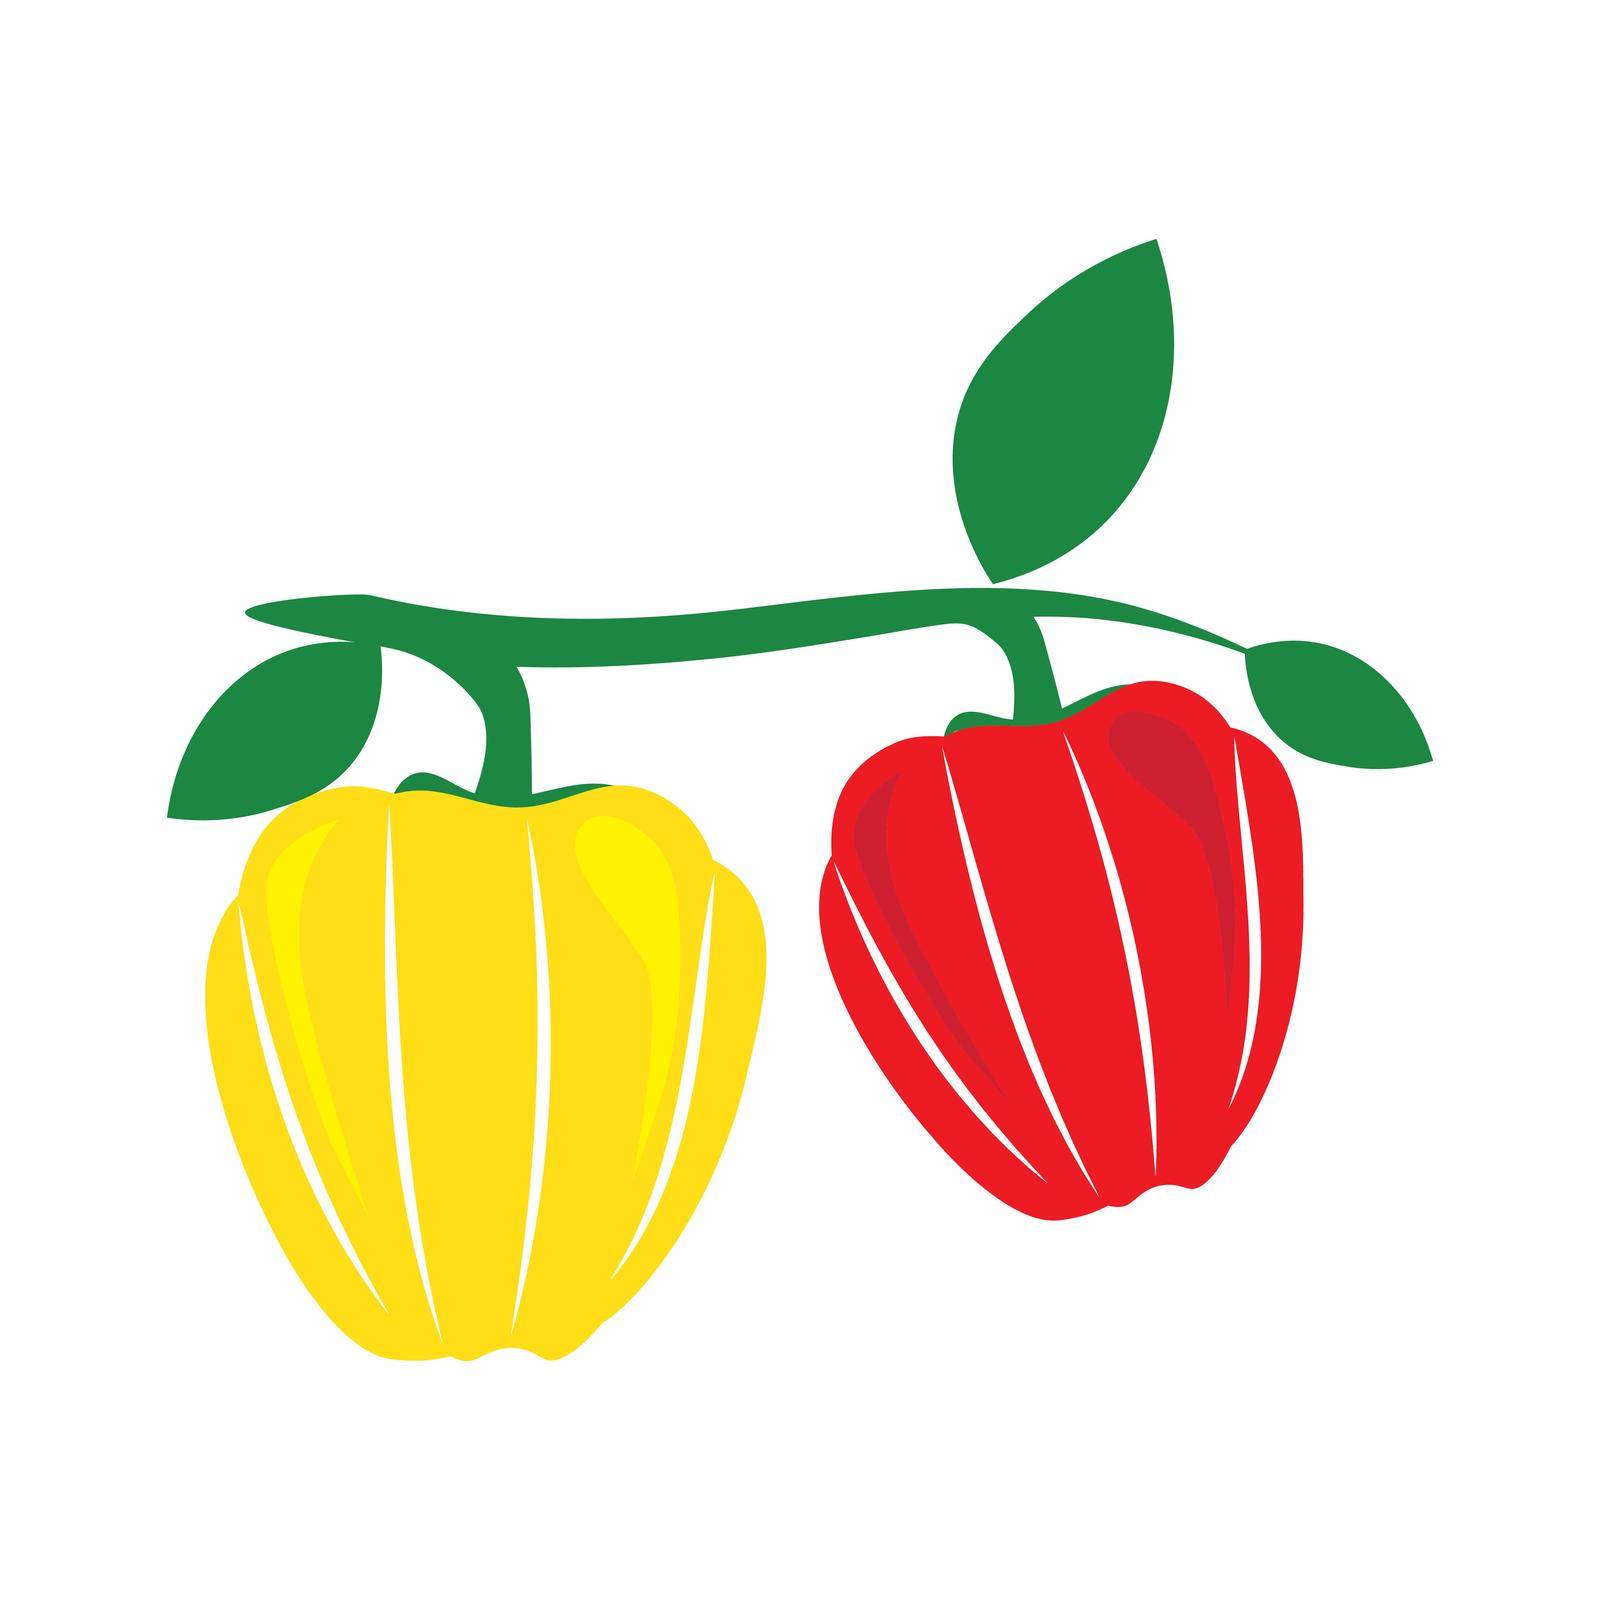 Paprika icon logo vector illustration